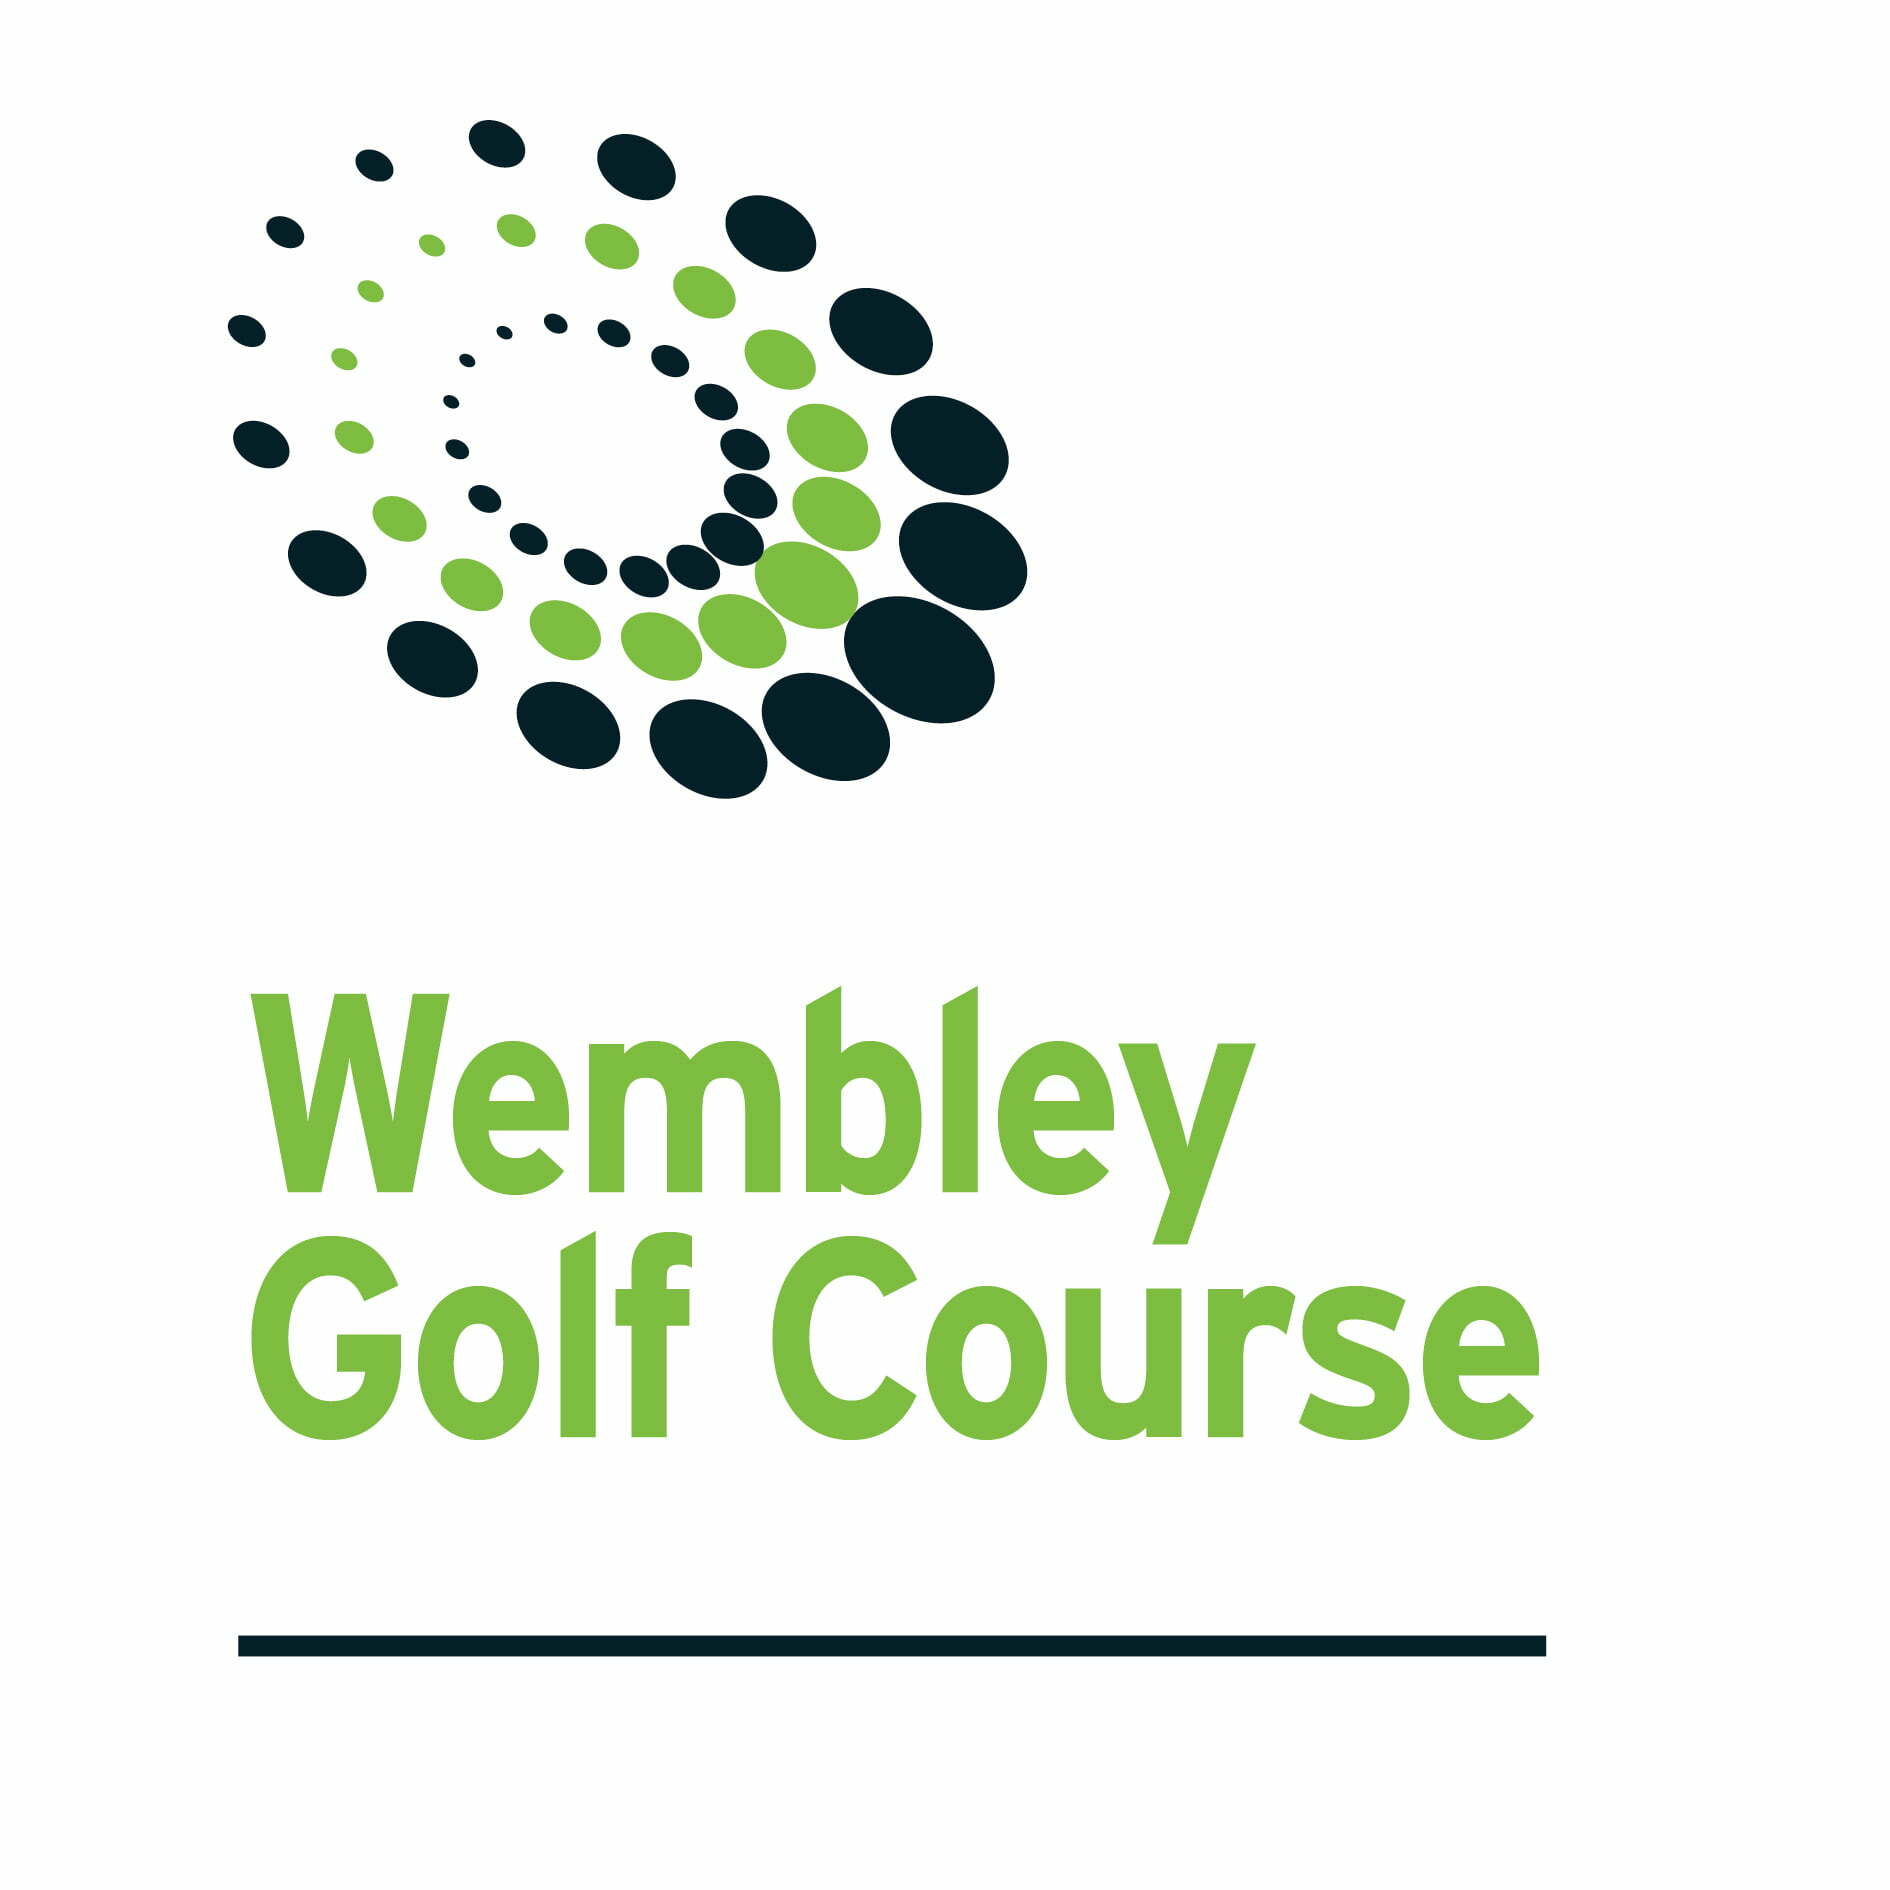 Wembley Golf Course logo